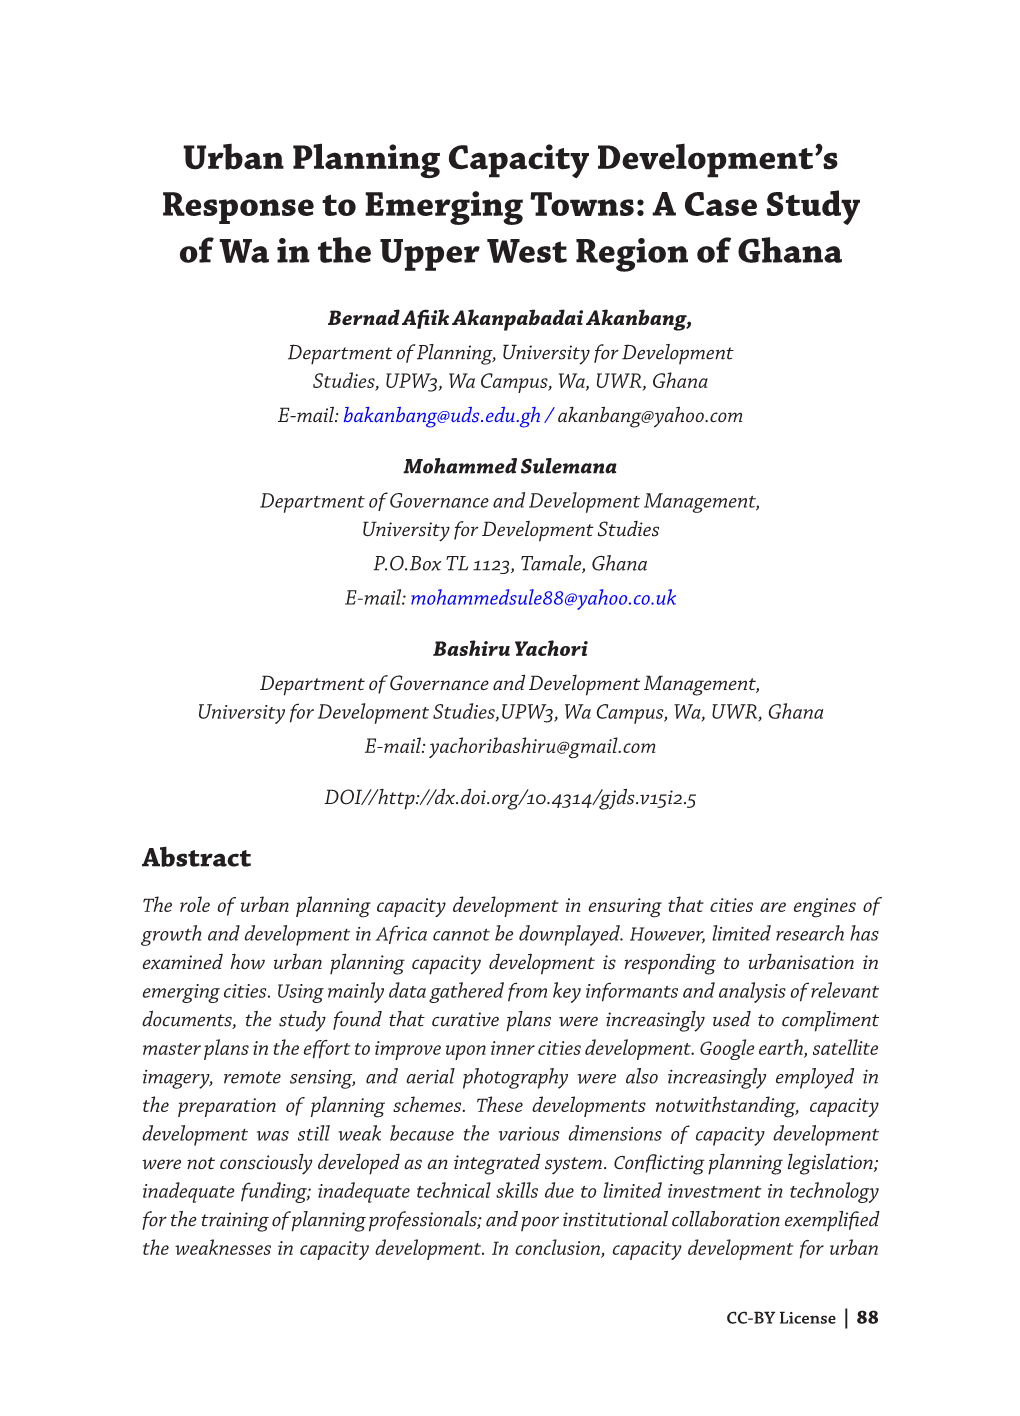 A Case Study of Wa in the Upper West Region of Ghana